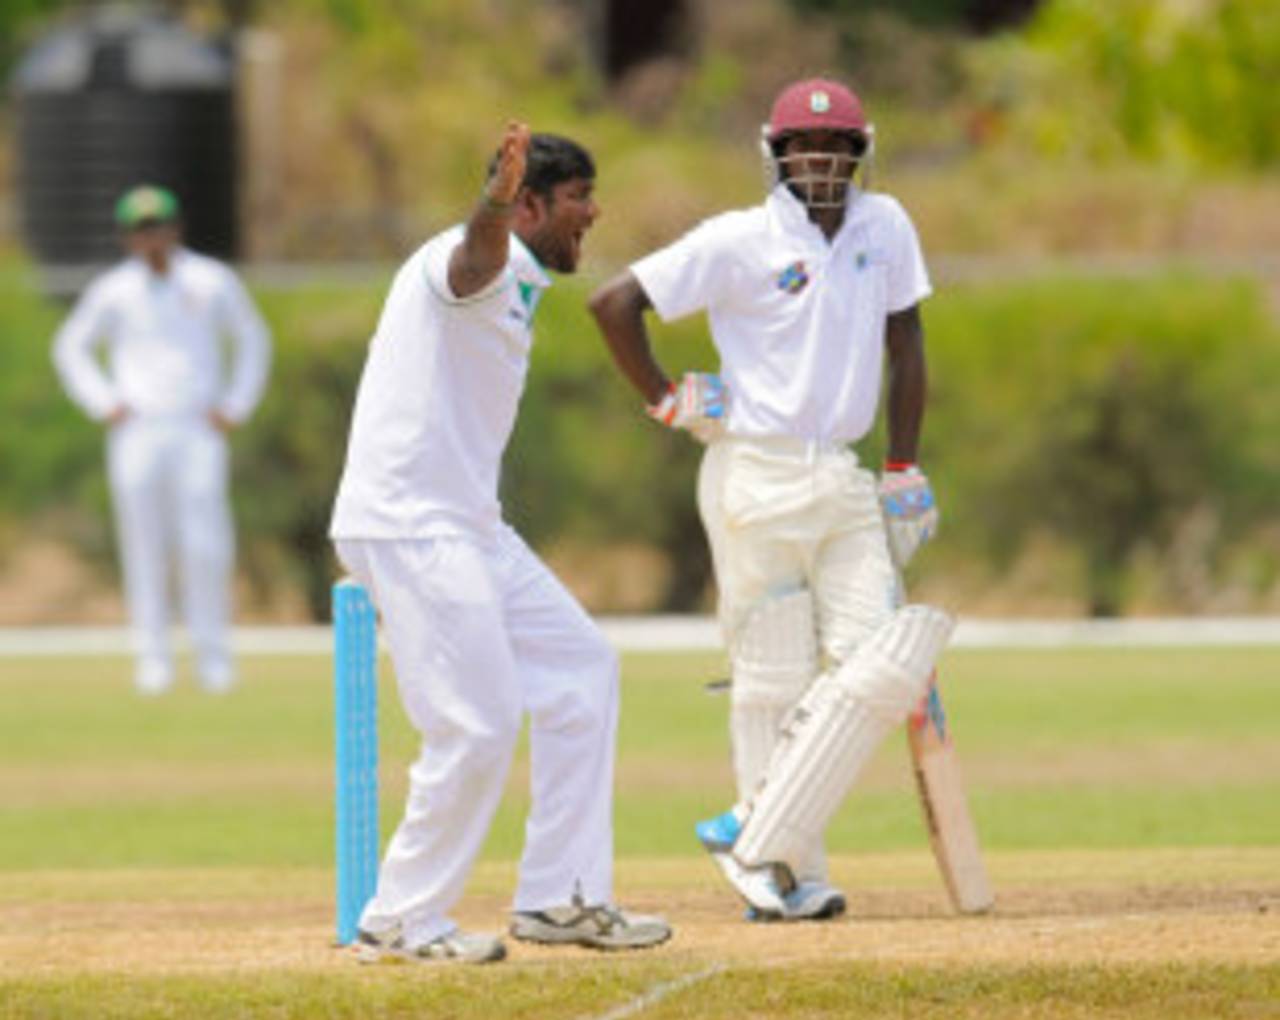 Robiul Islam appeals, Sagicor HPC v Bangladesh A, Barbados, 1st day, May 26, 2014